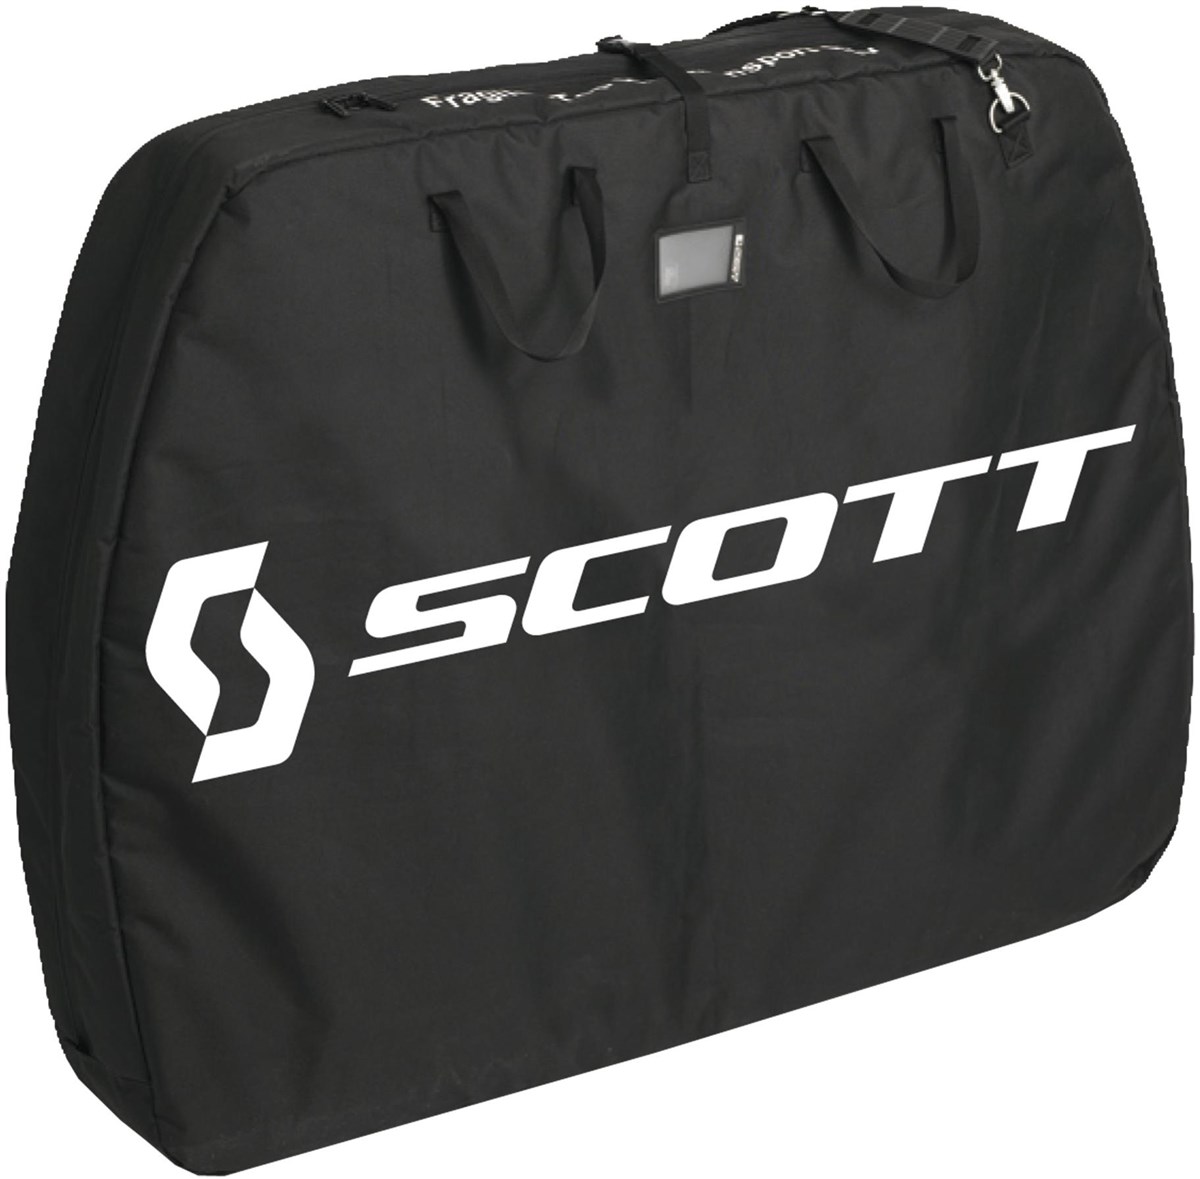 Scott Classic Bike Transport Bag